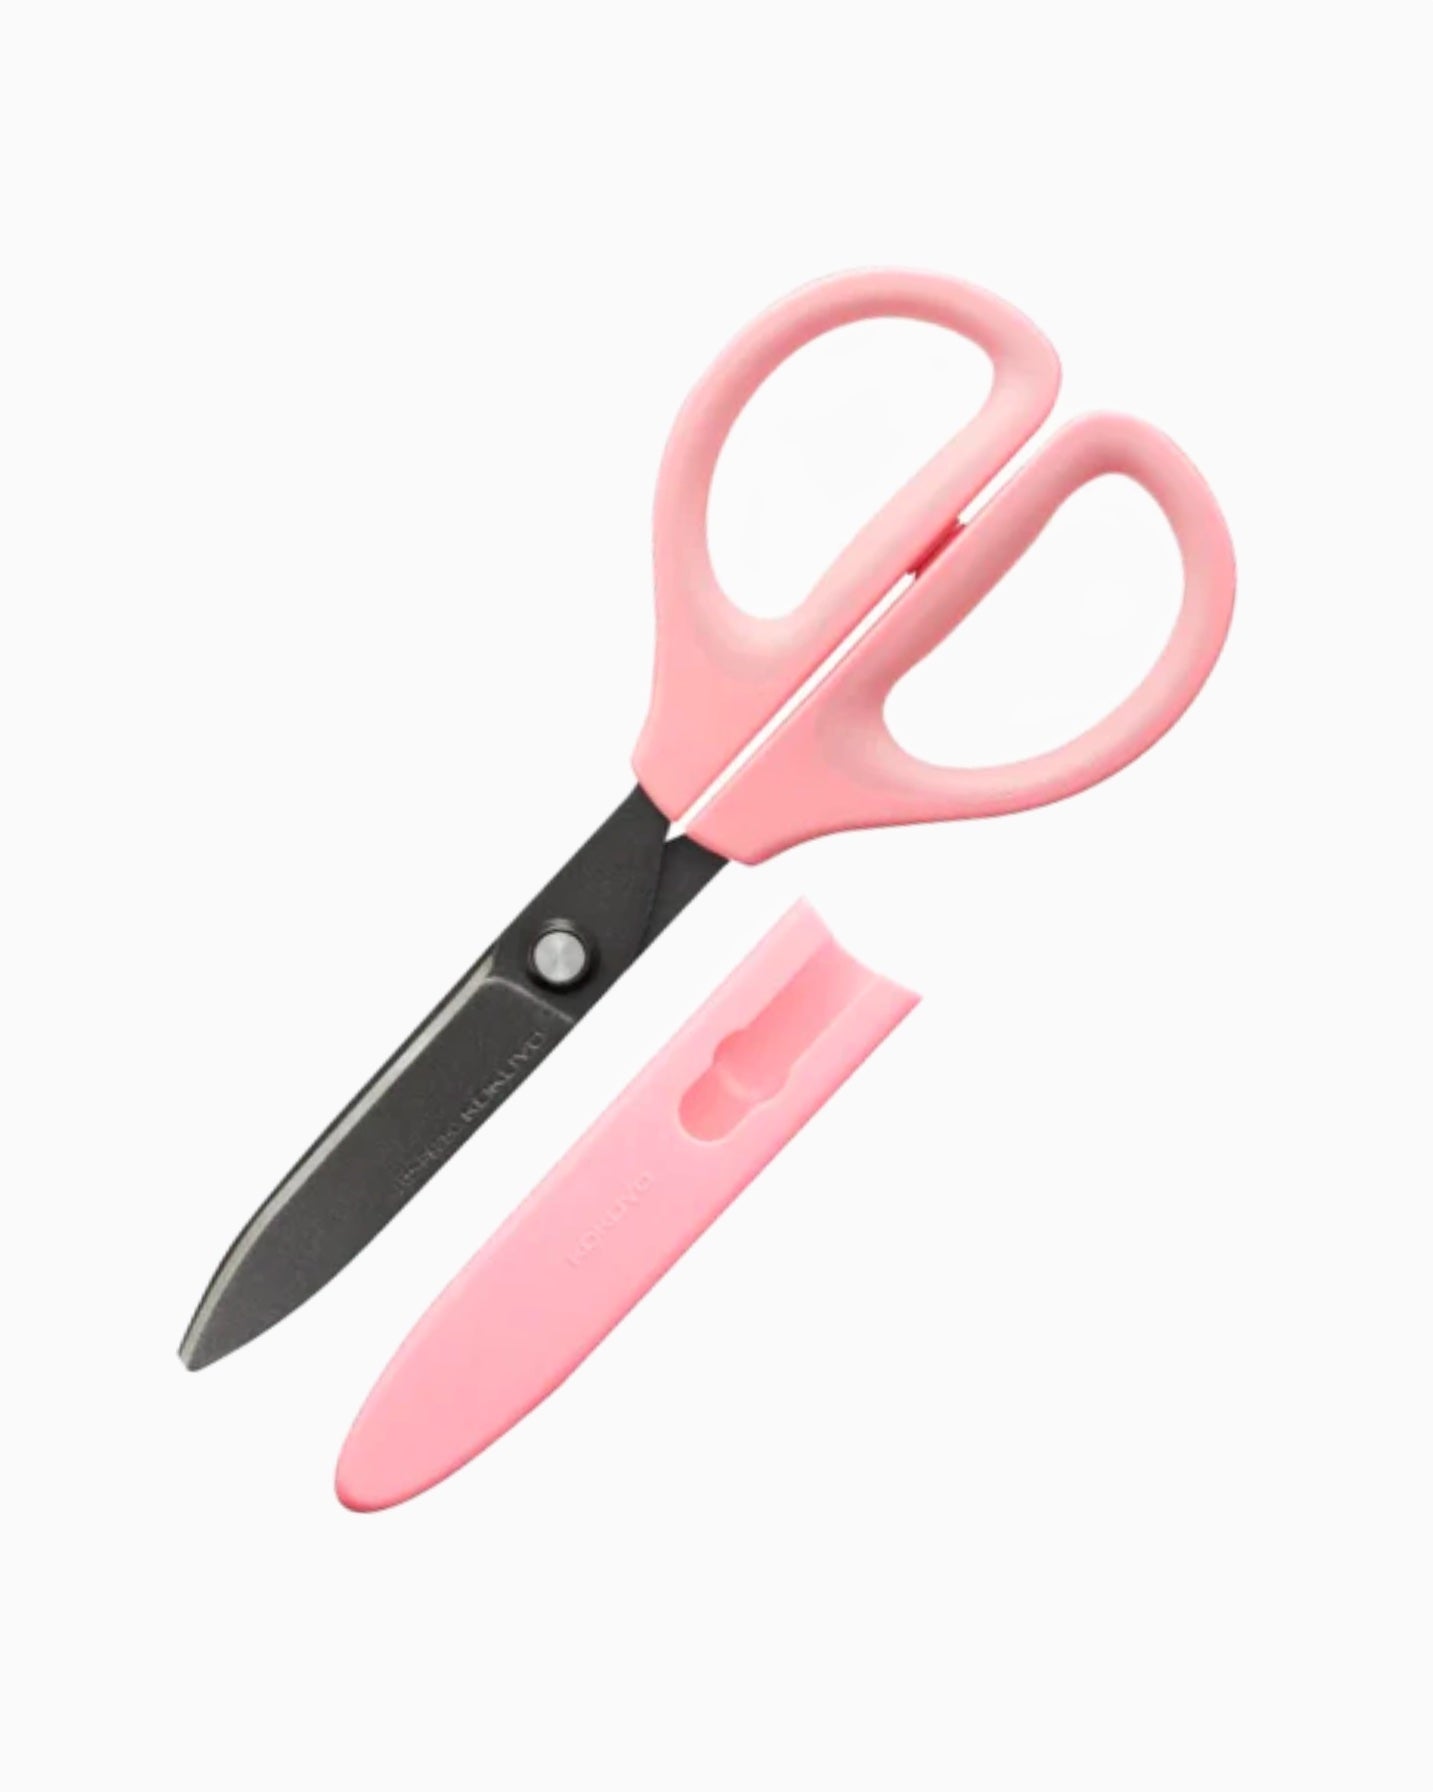 Kokuyo Plastic Scissors, Unique Stationery